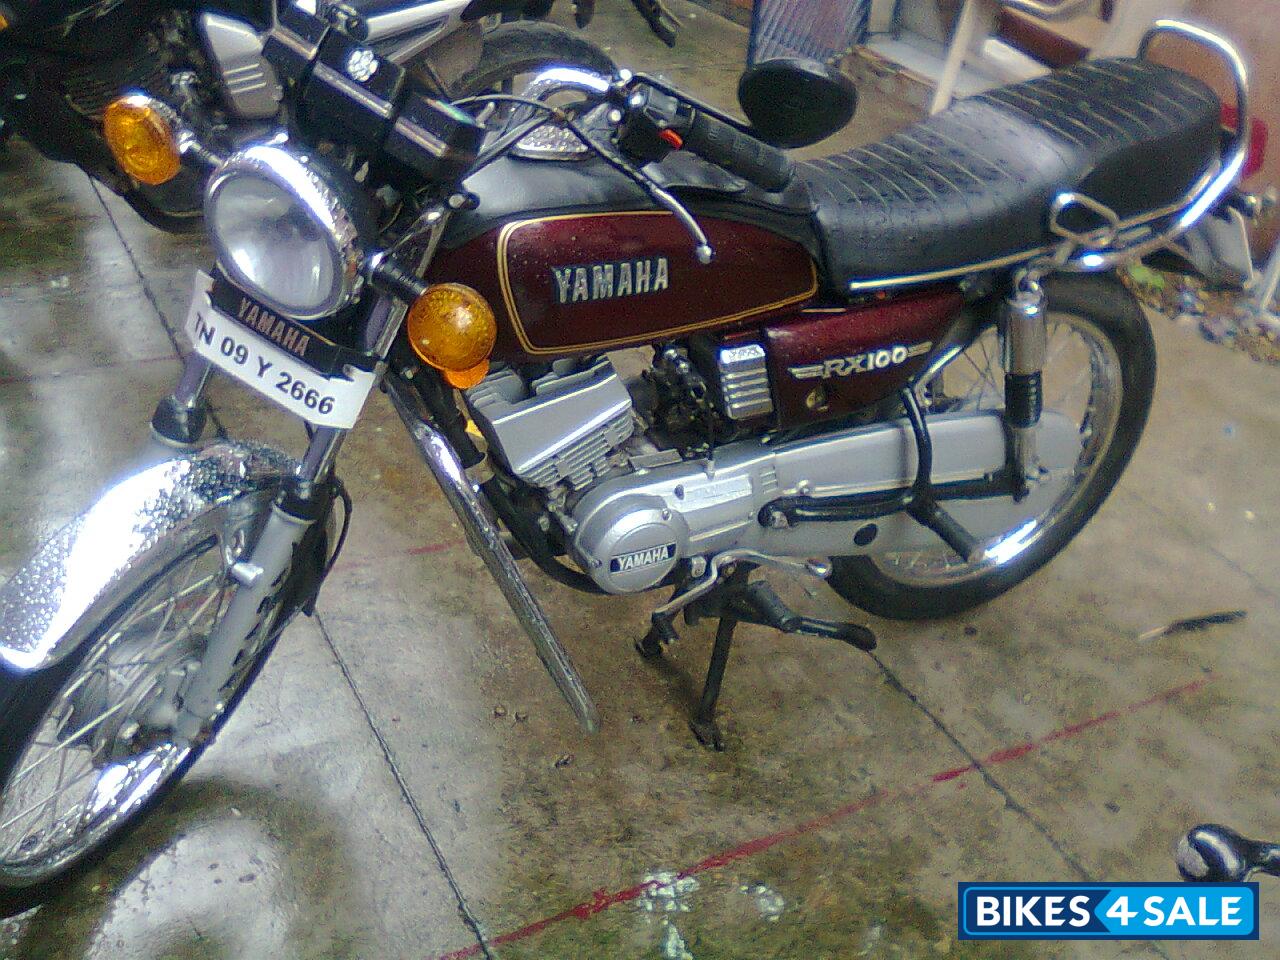 Yamaha Rx 100 Bike Price In Chennai